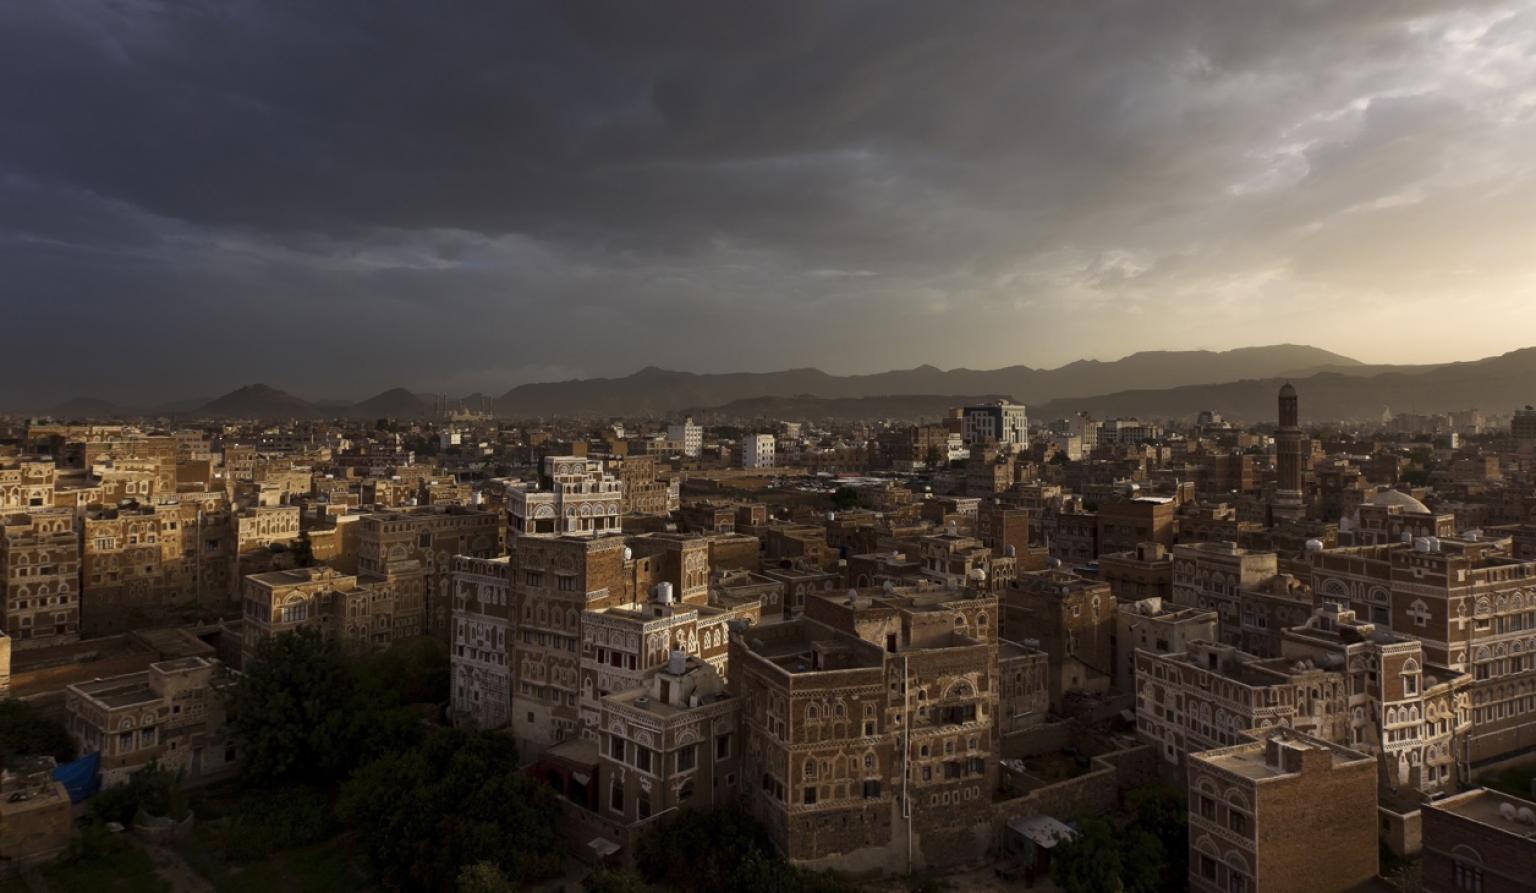 A shot of an ancient neighborhood in Sanaa, the capital of Yemen, taken long before Saudi Arabia's invasion.